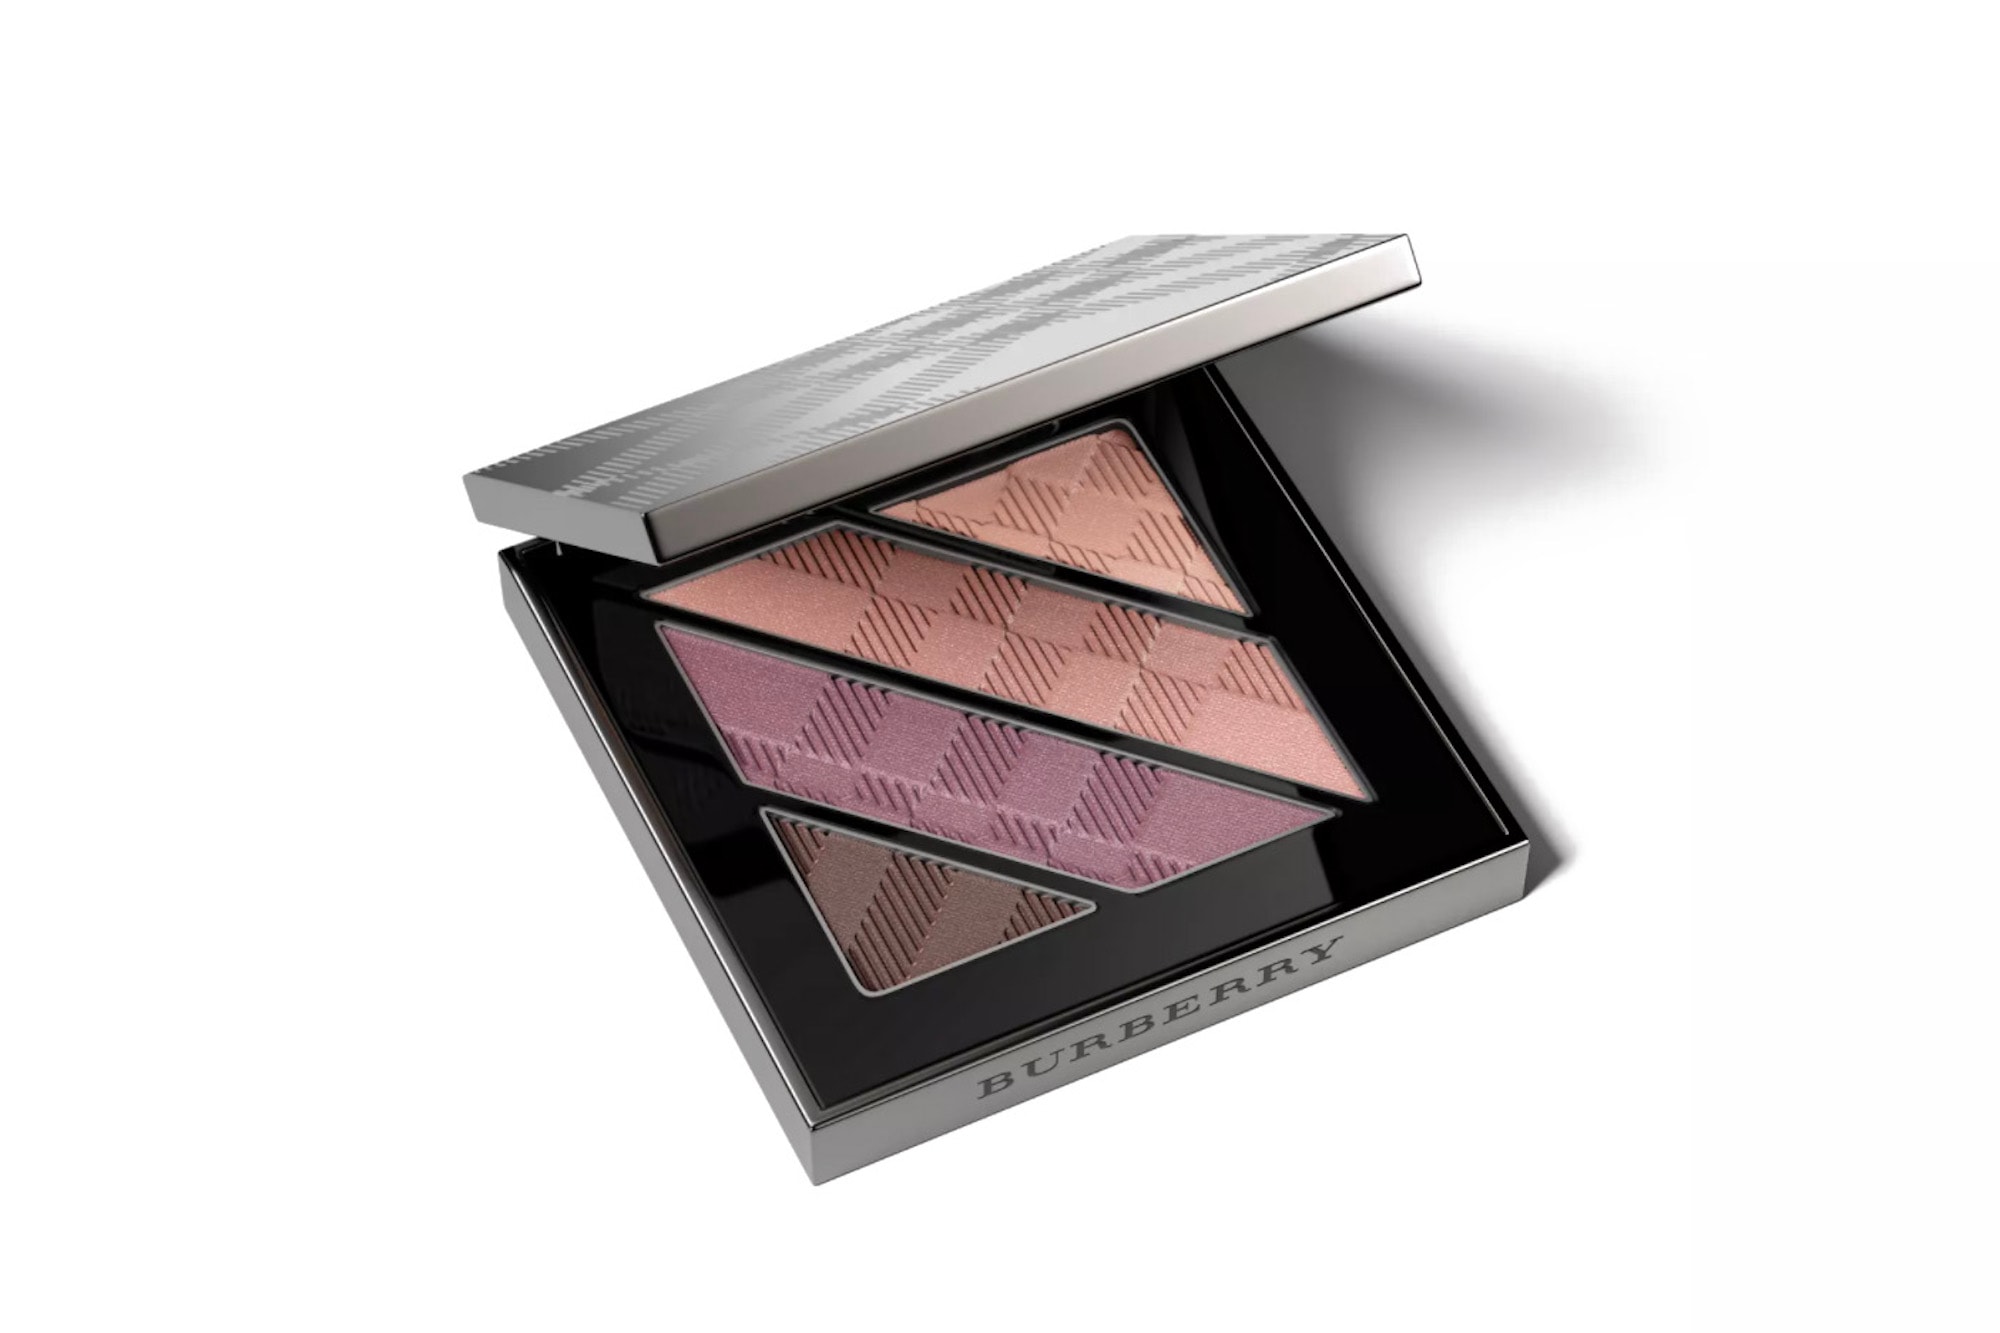 Burberry Beauty Eyeshadow Palettes Four Shades Pink Beige Nude Grey Black Smokey Eyes